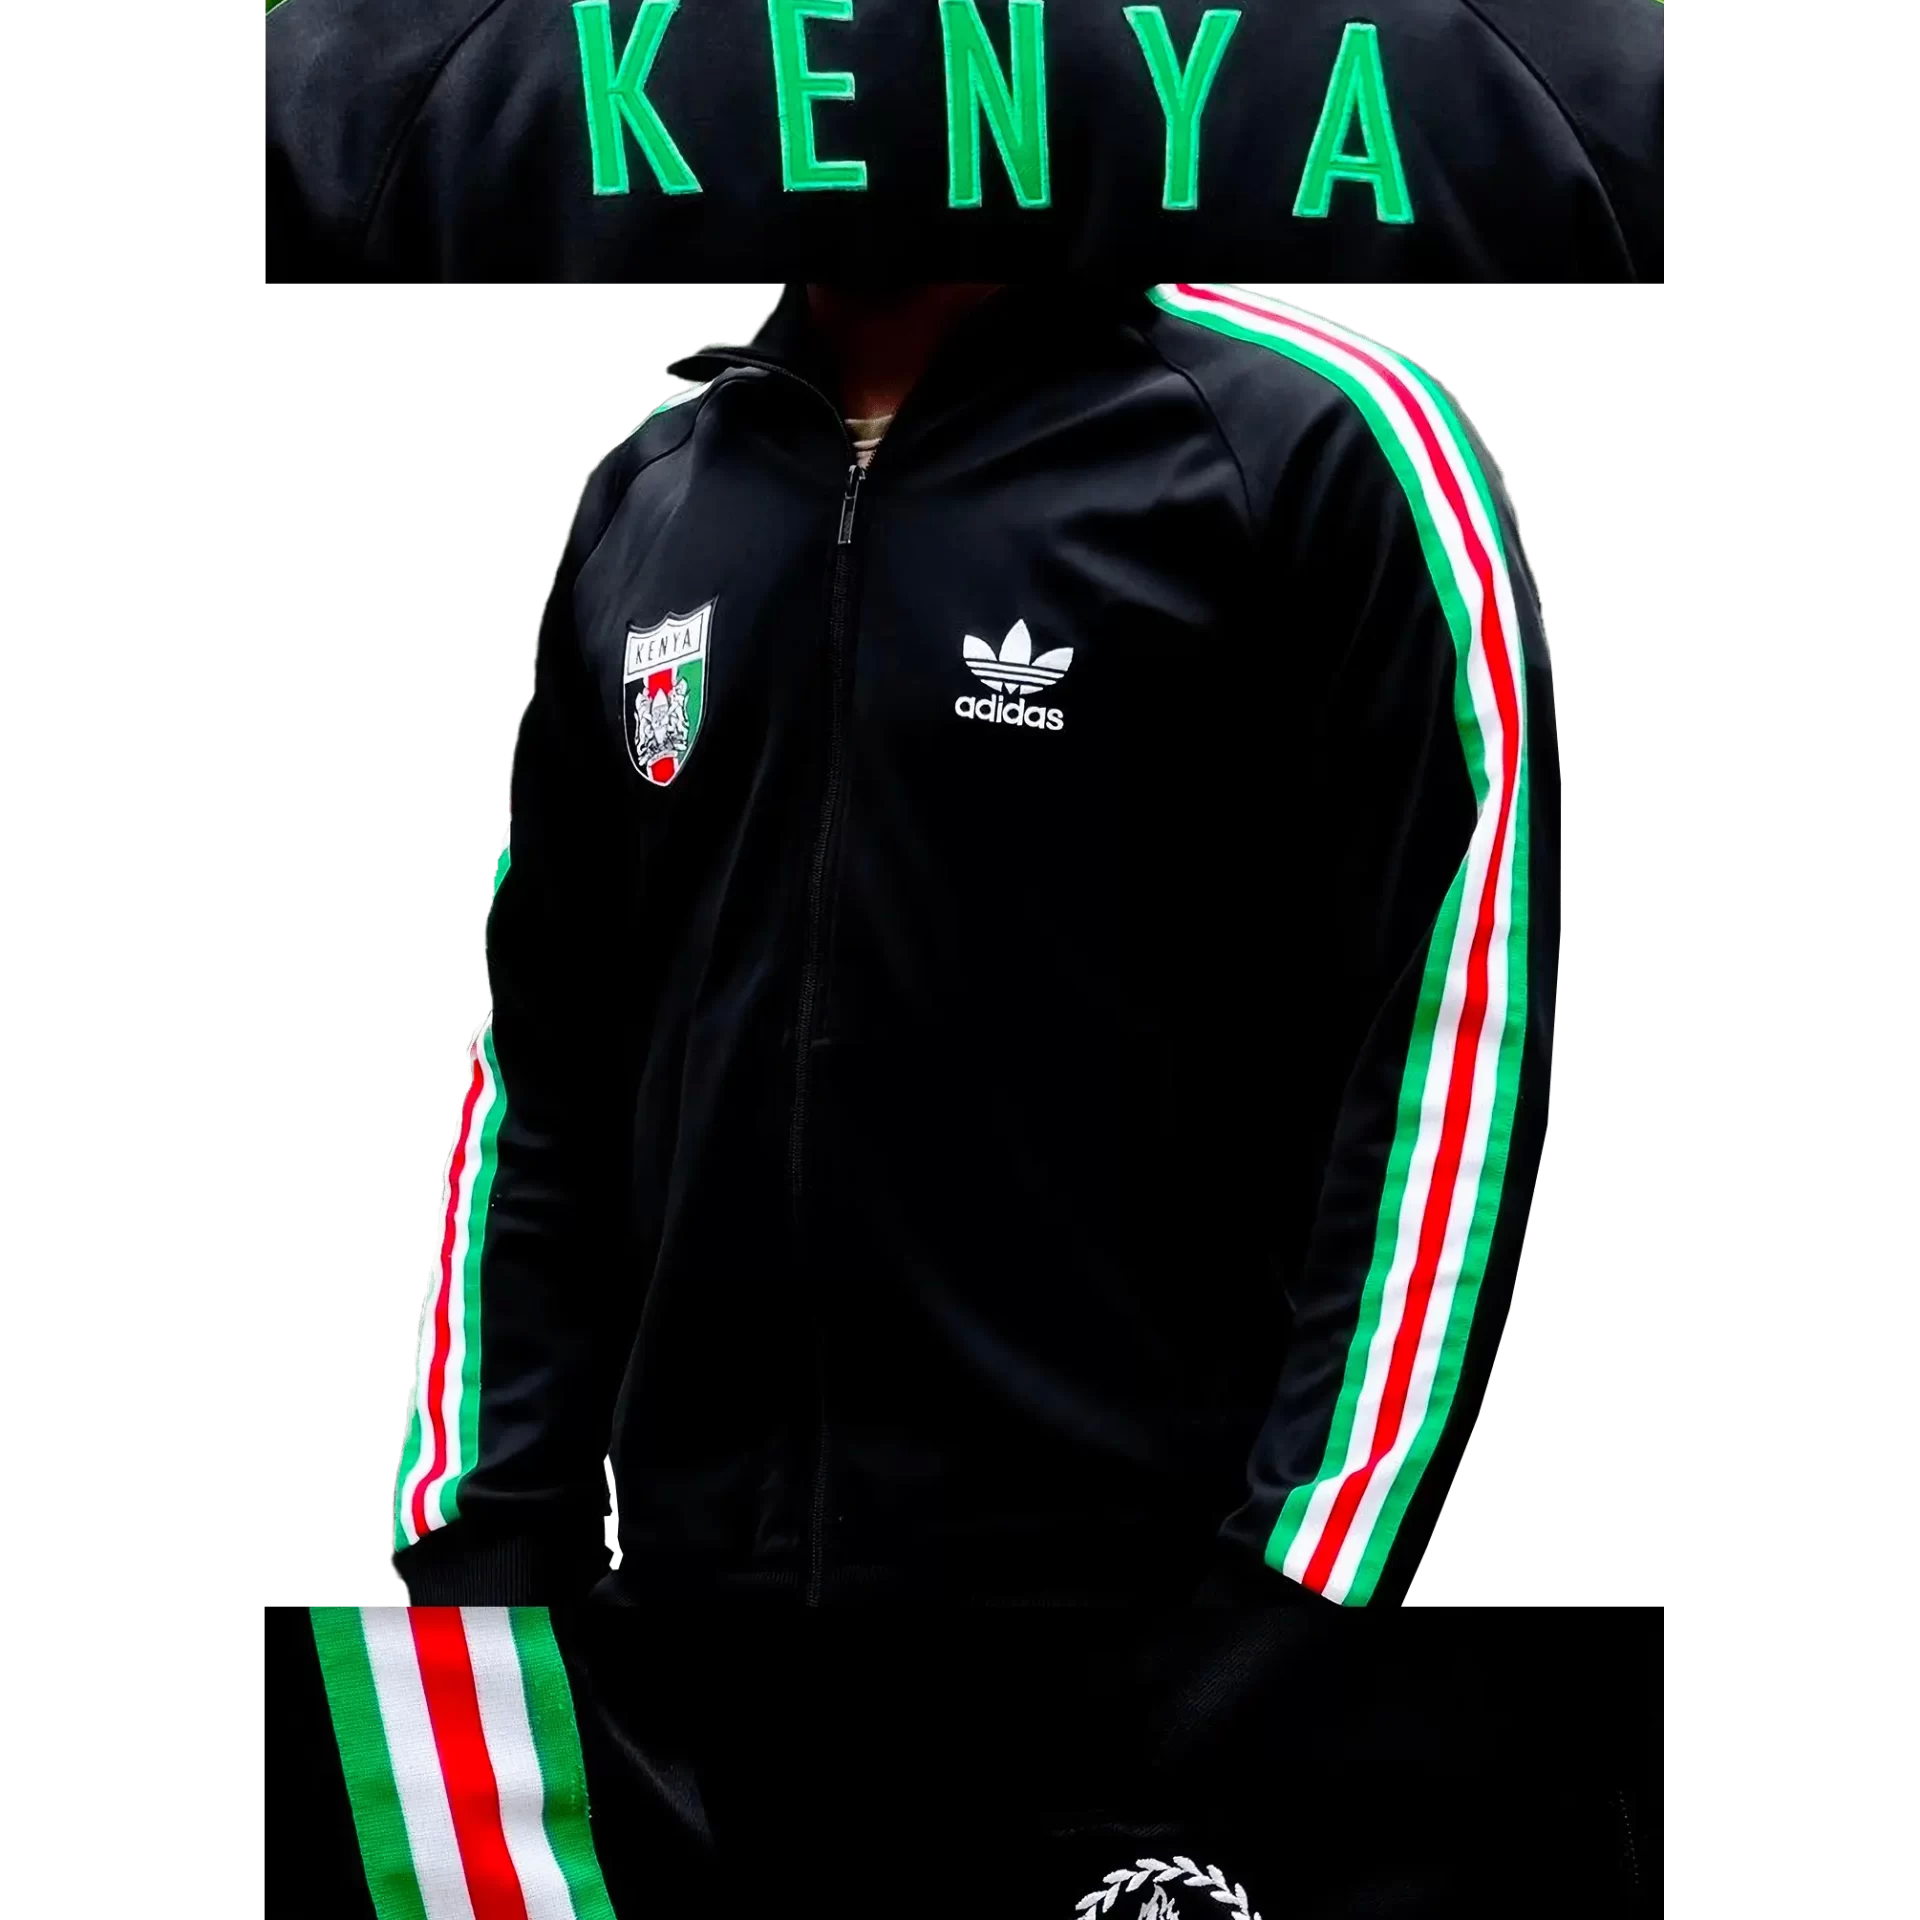 Men's 2007 Kenya Harambee TT by Adidas Originals: Breakthrough (EnLawded.com file #lmchk72598ip2y124149kg9st)